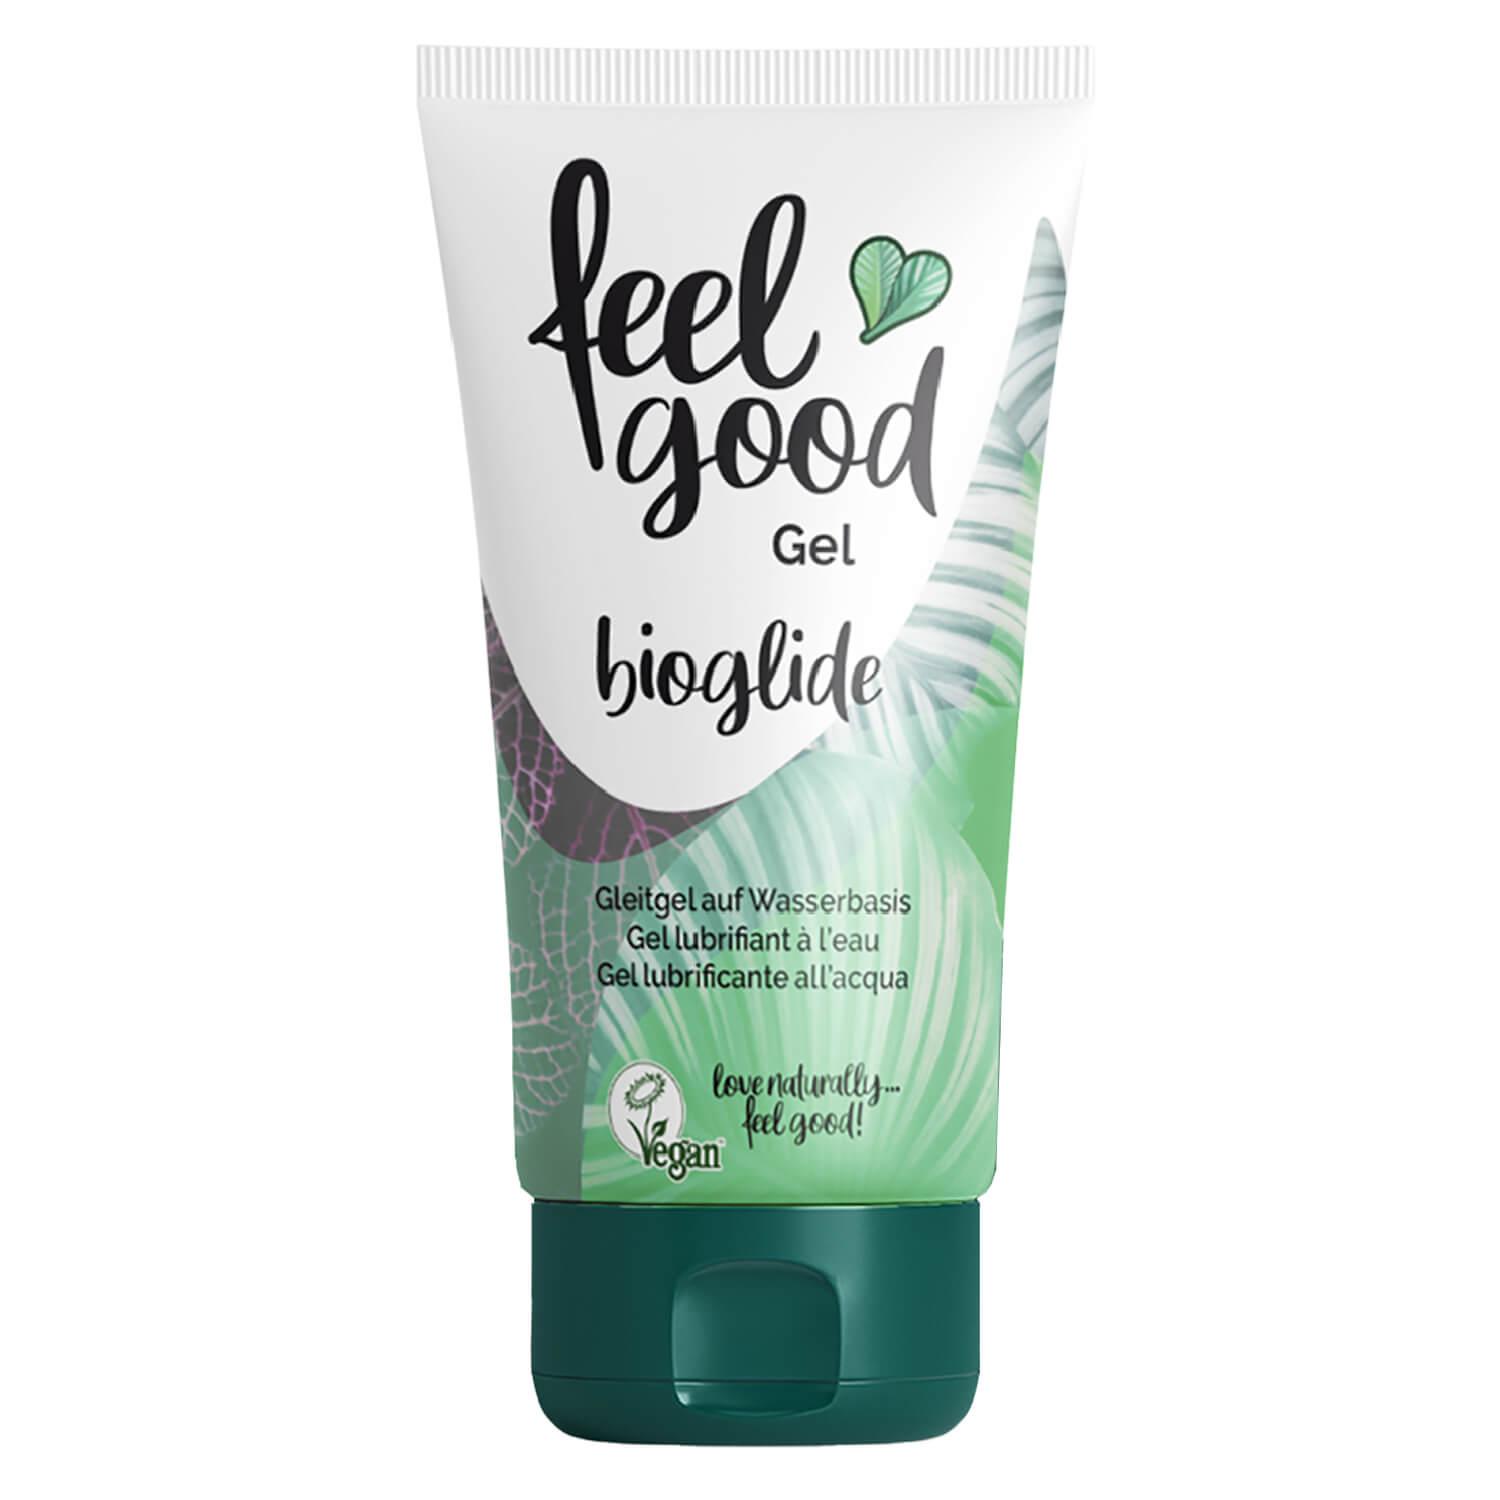 feelgood condoms - Gel lubrifiant bioglide